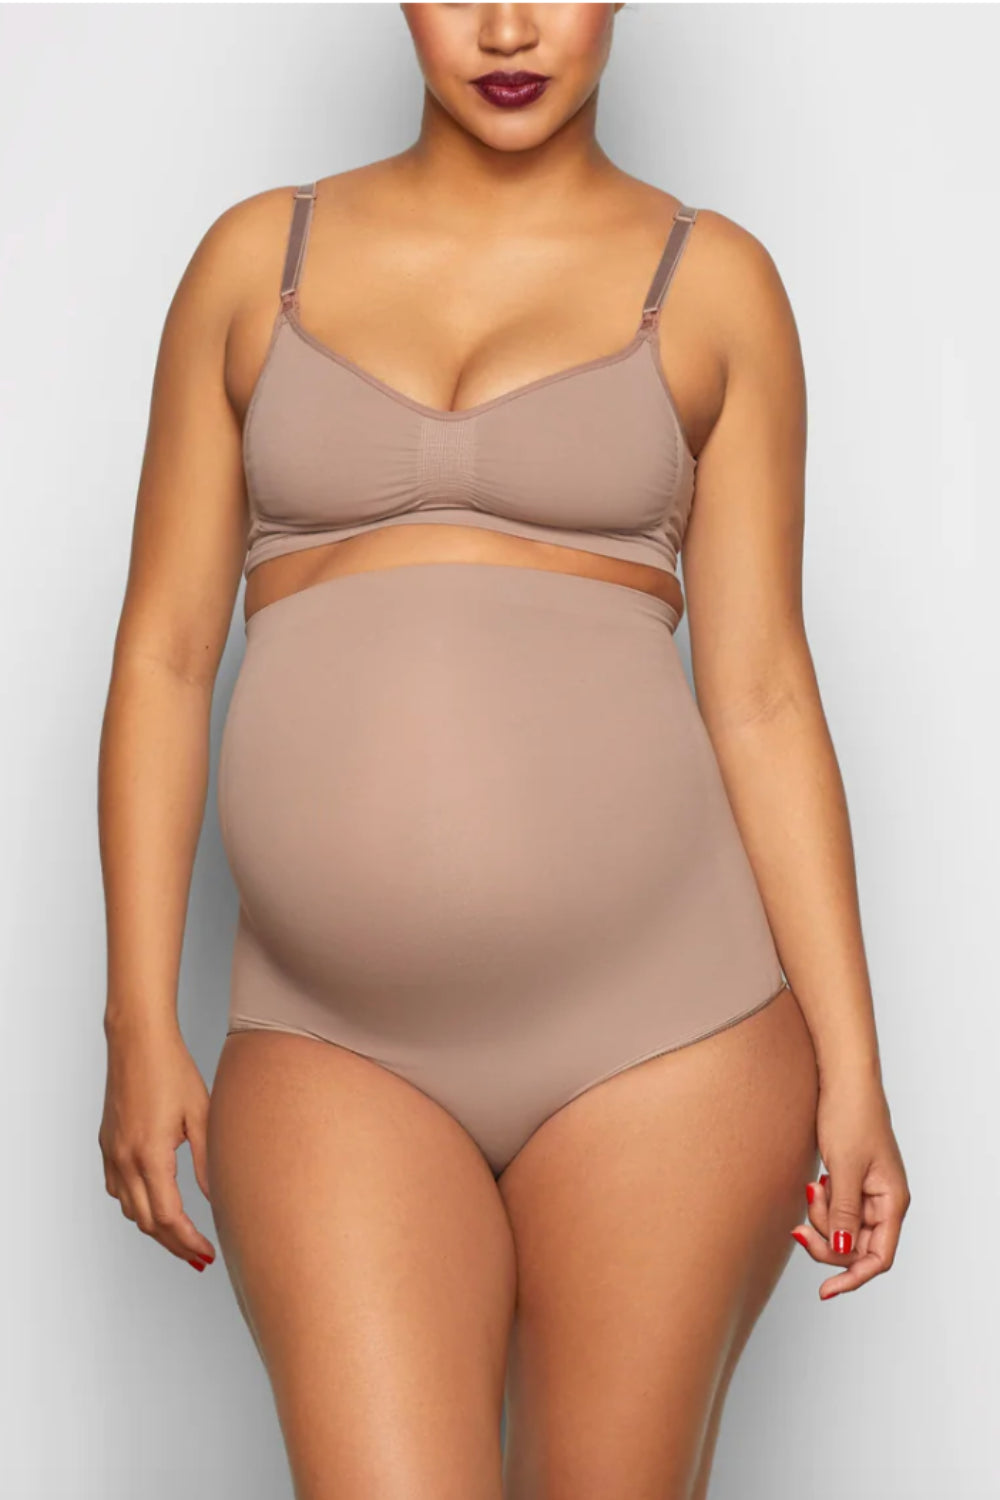 Motherhood Maternity Nude Tan Nursing Bra Demi 38C Size undefined